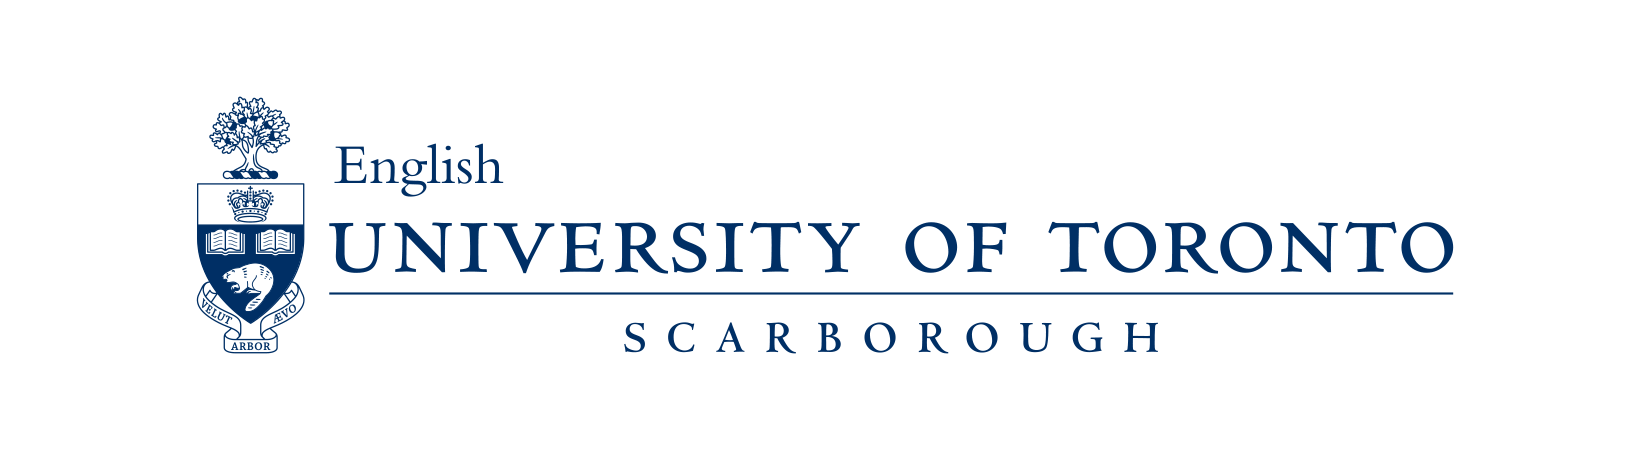 University of Toronto Scarborough - English